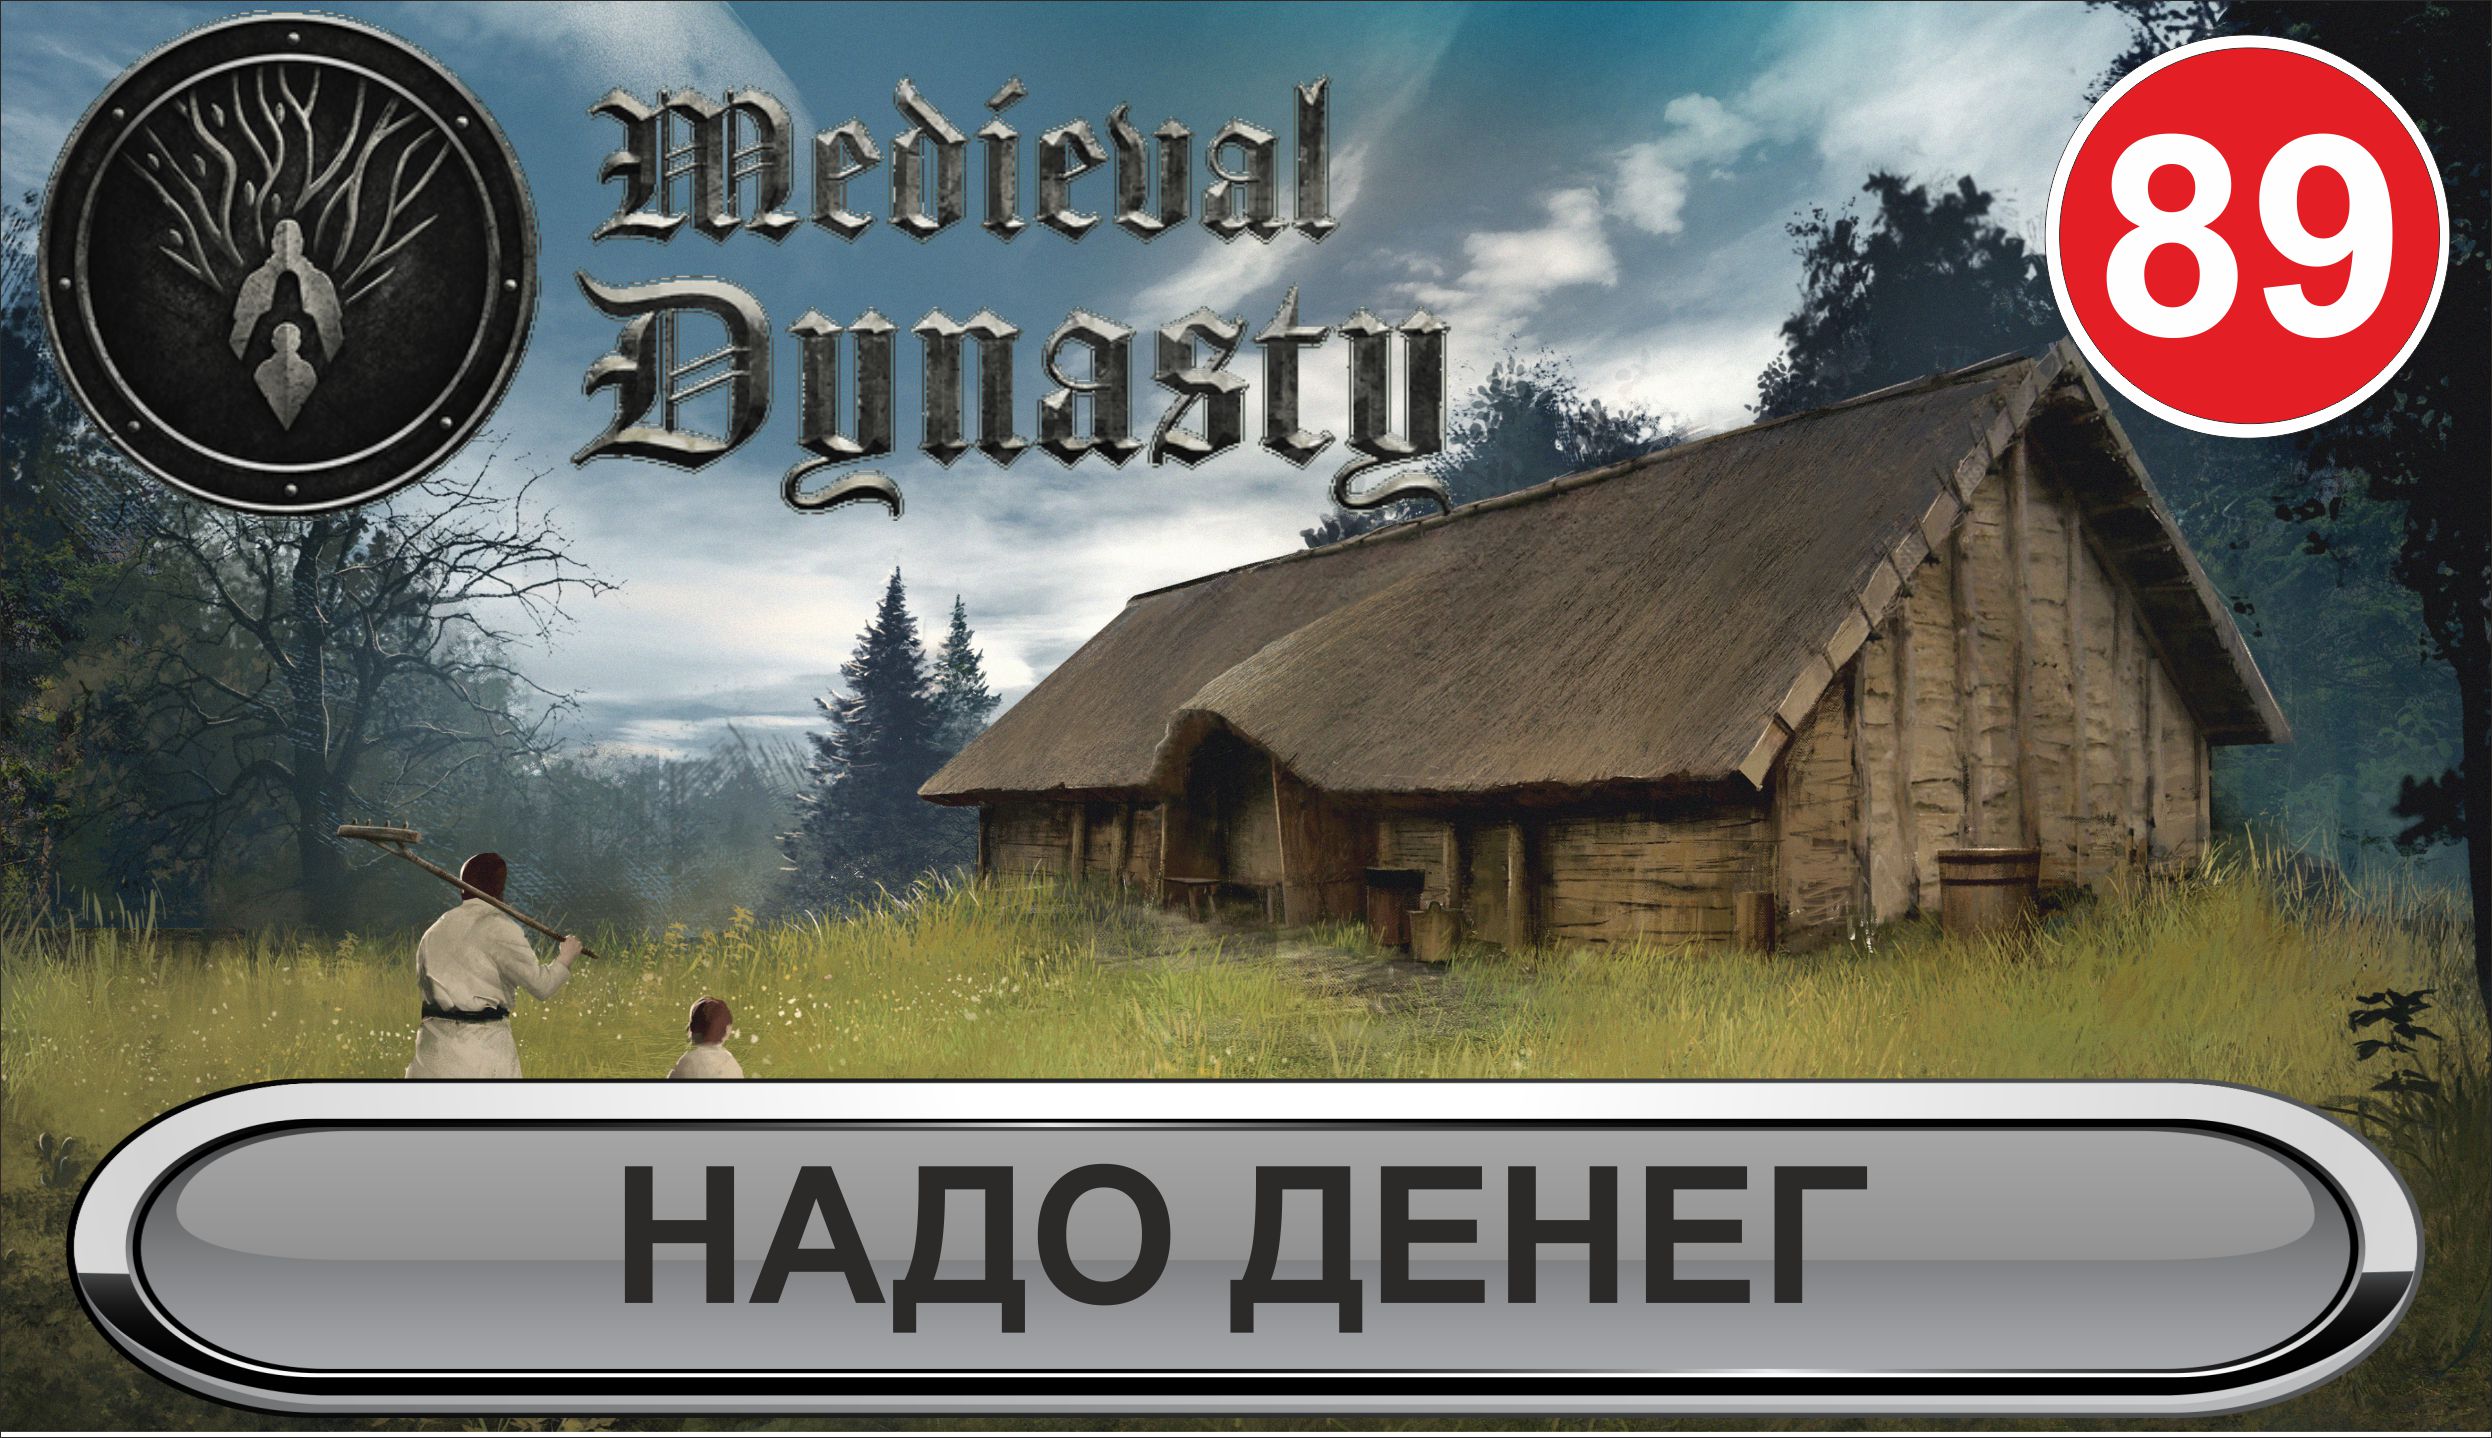 Medieval Dynasty - Надо денег